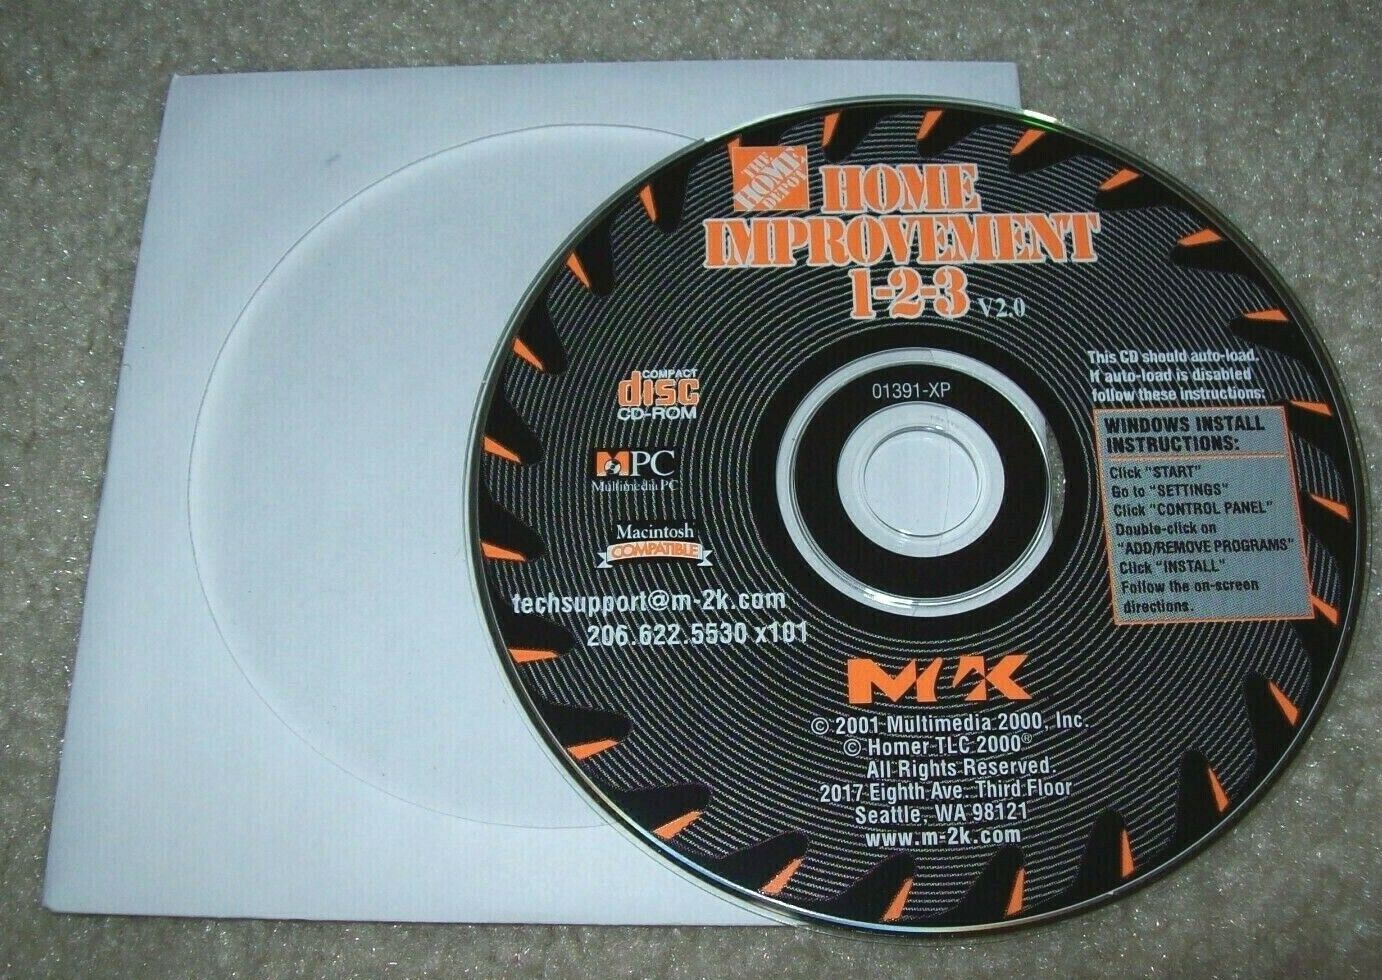 Home Depot Home Improvement 1-2-3 v2.0 2001 CD Program for PC/Mac Mint Condition